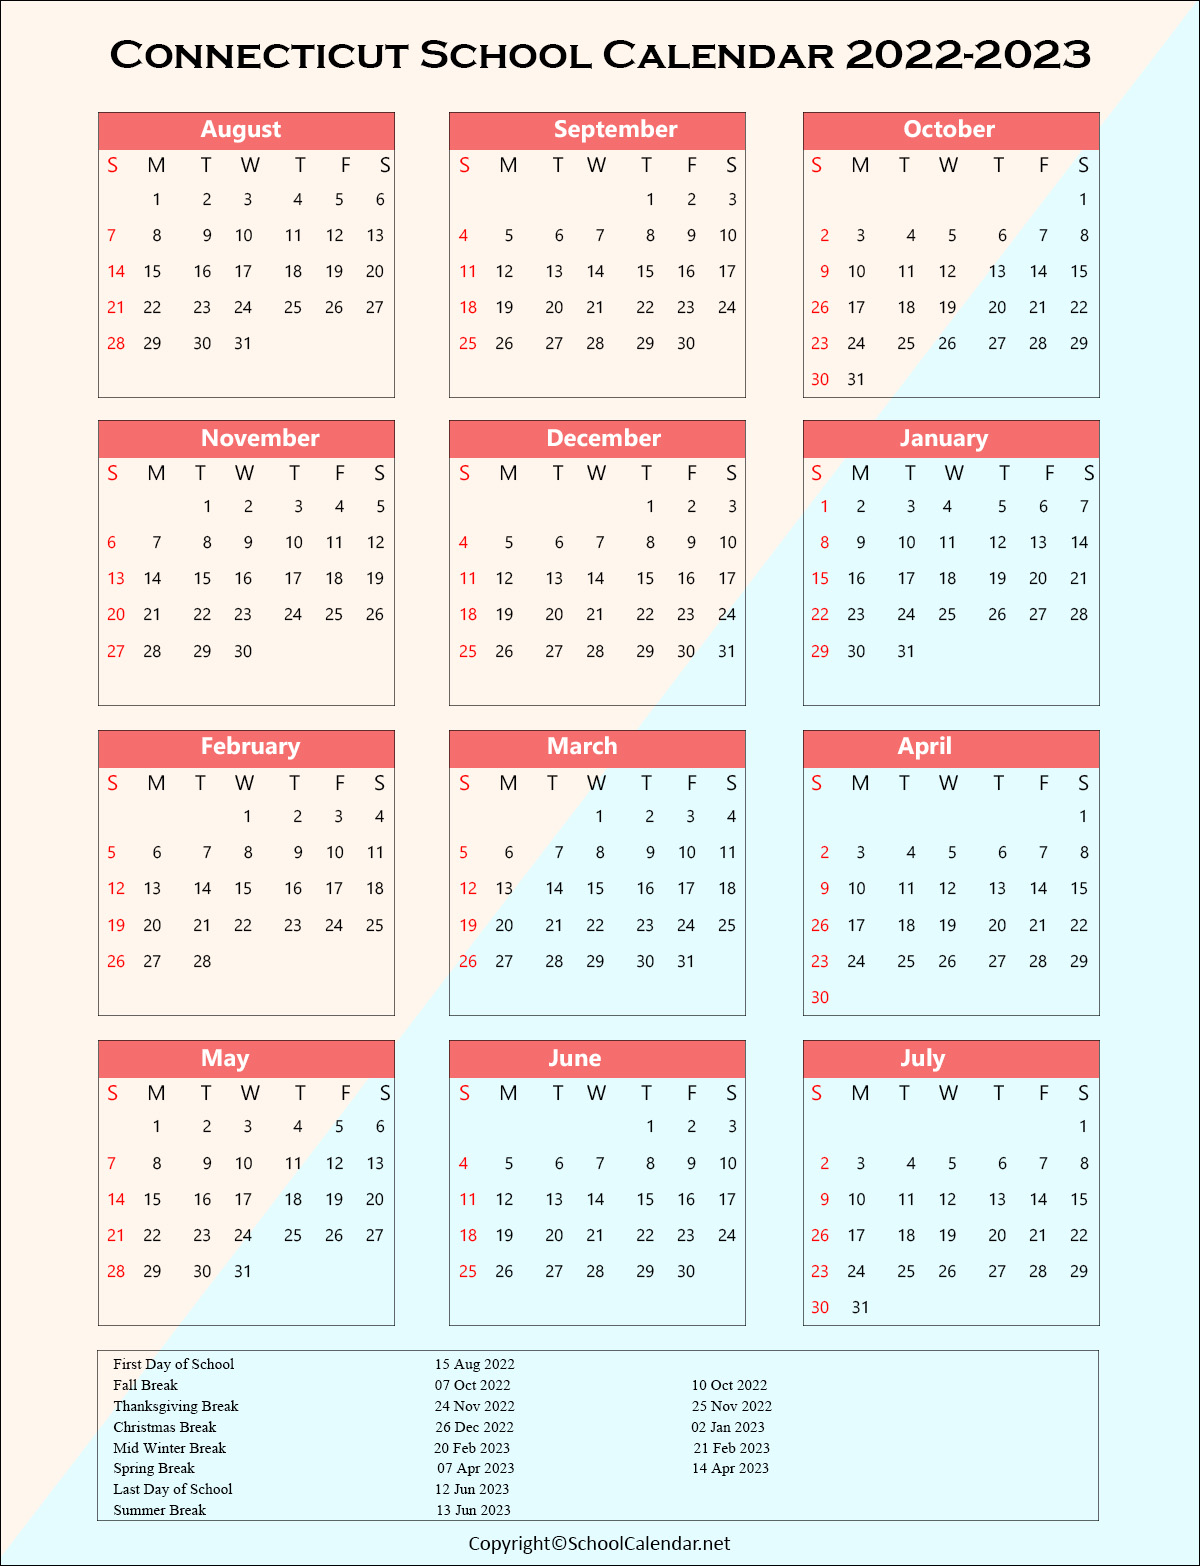 Connecticut School Holiday Calendar 2022